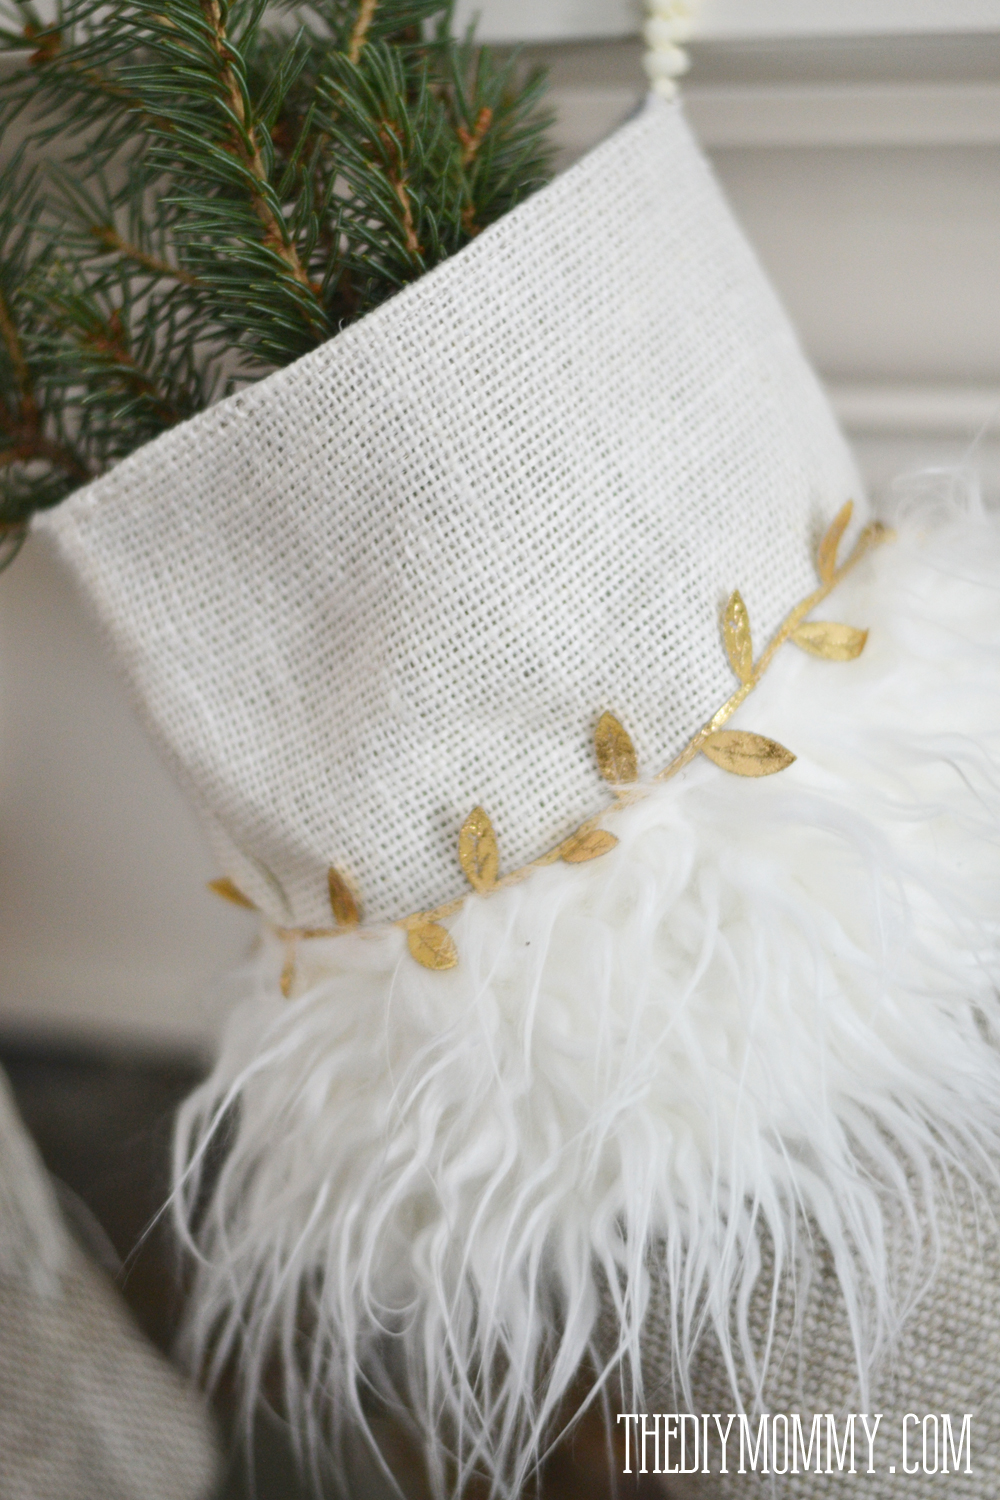 Anthropologie Inspired Linen Burlap Christmas Stockings - Free Pattern & Tutorial